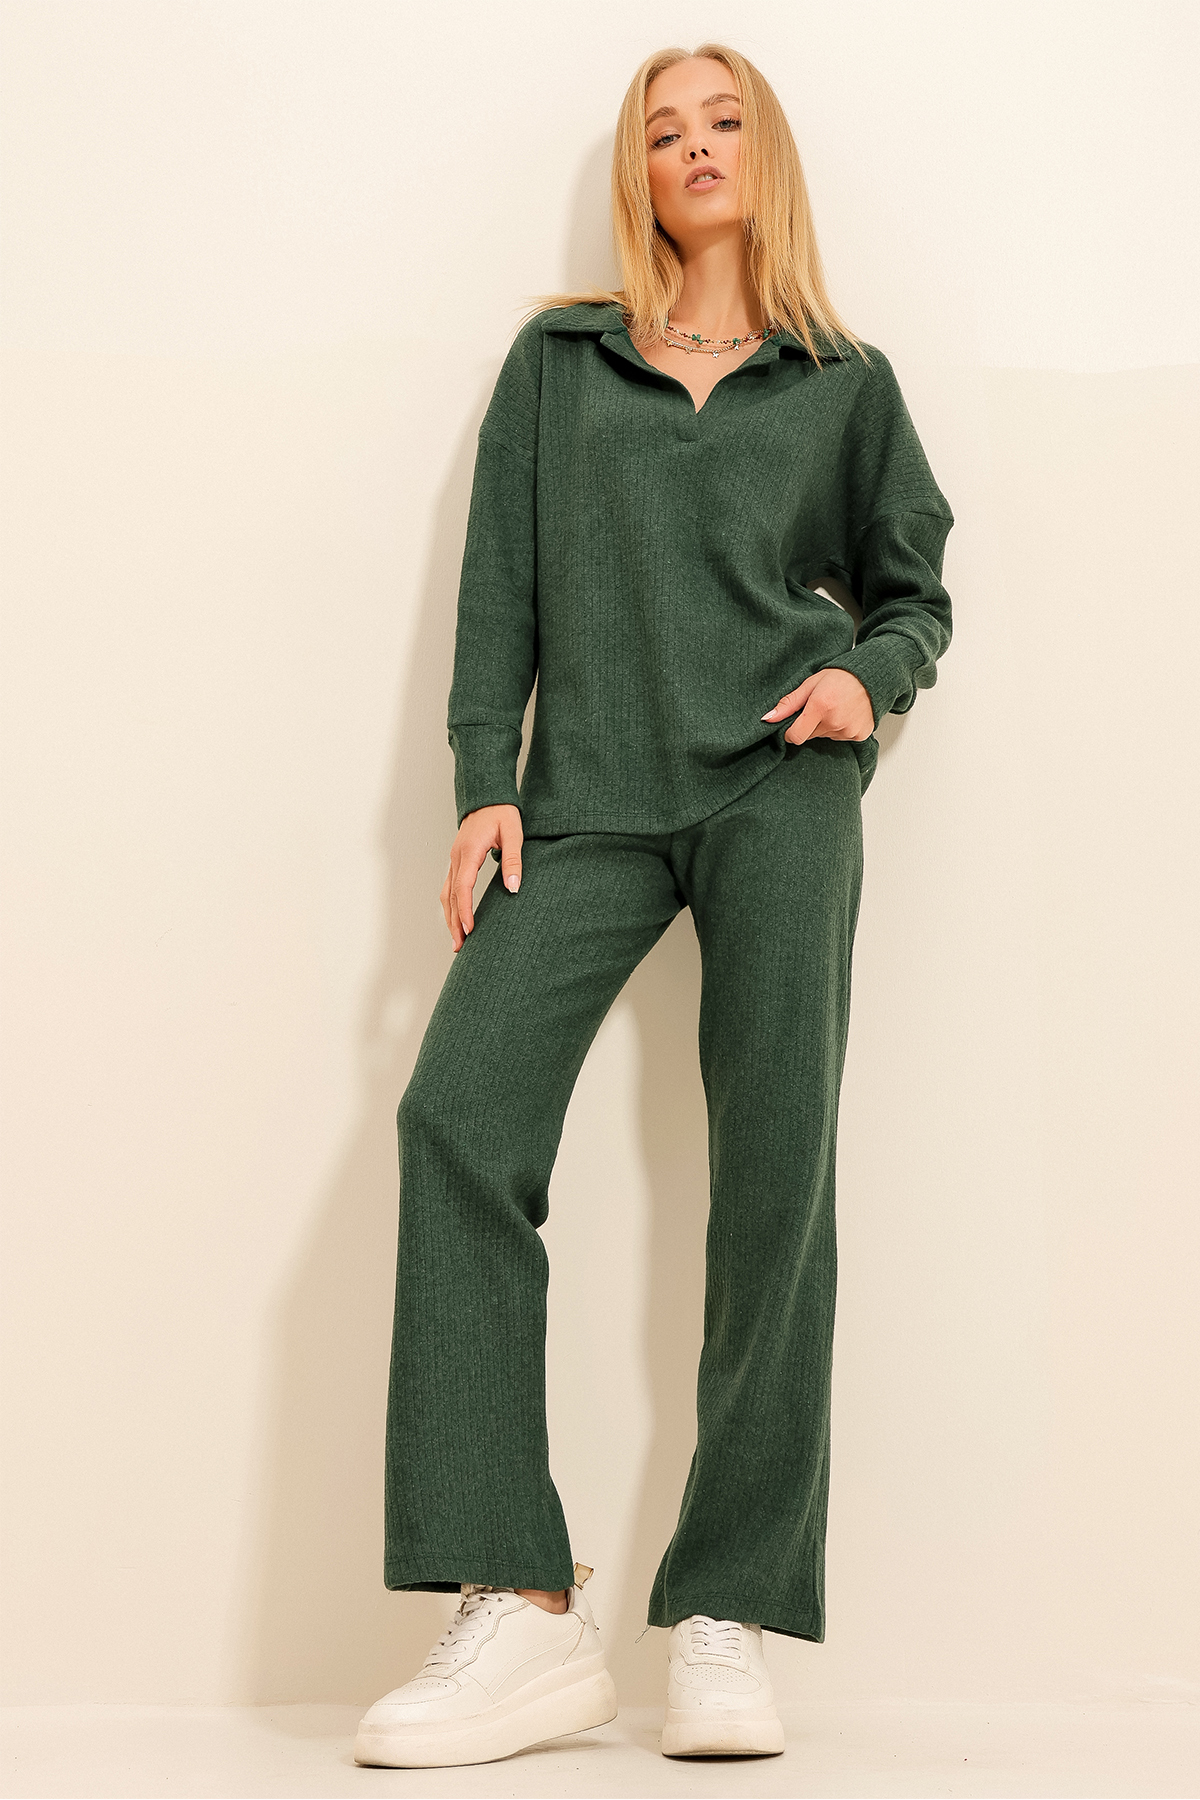 Trend Alaçatı Stili Women's Walnut Green Polo Neck Top And Palazzon Trousers Knitwear Bottom Top Set